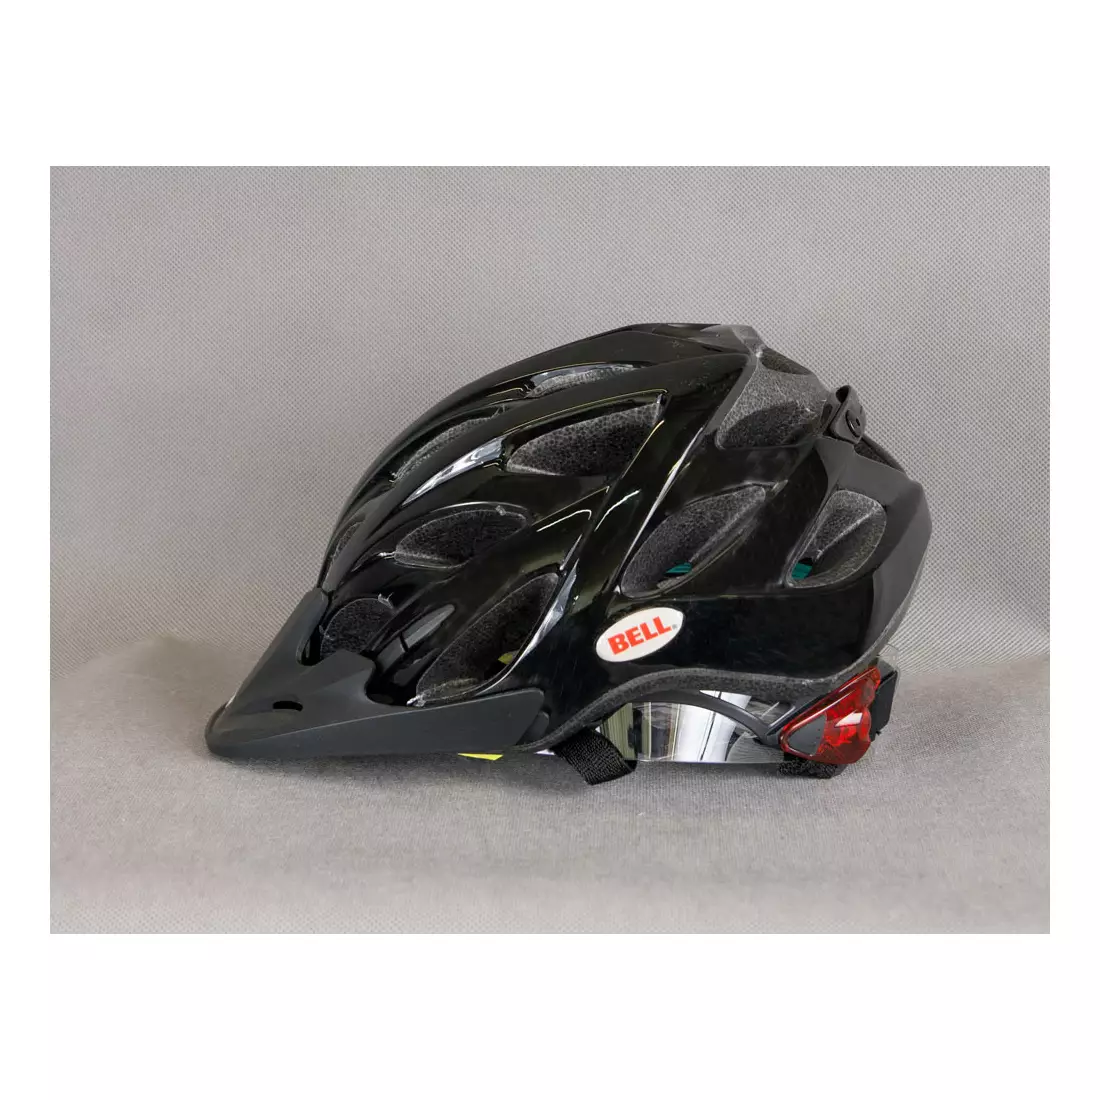 BELL - ARELLA women's bicycle helmet, color: Black